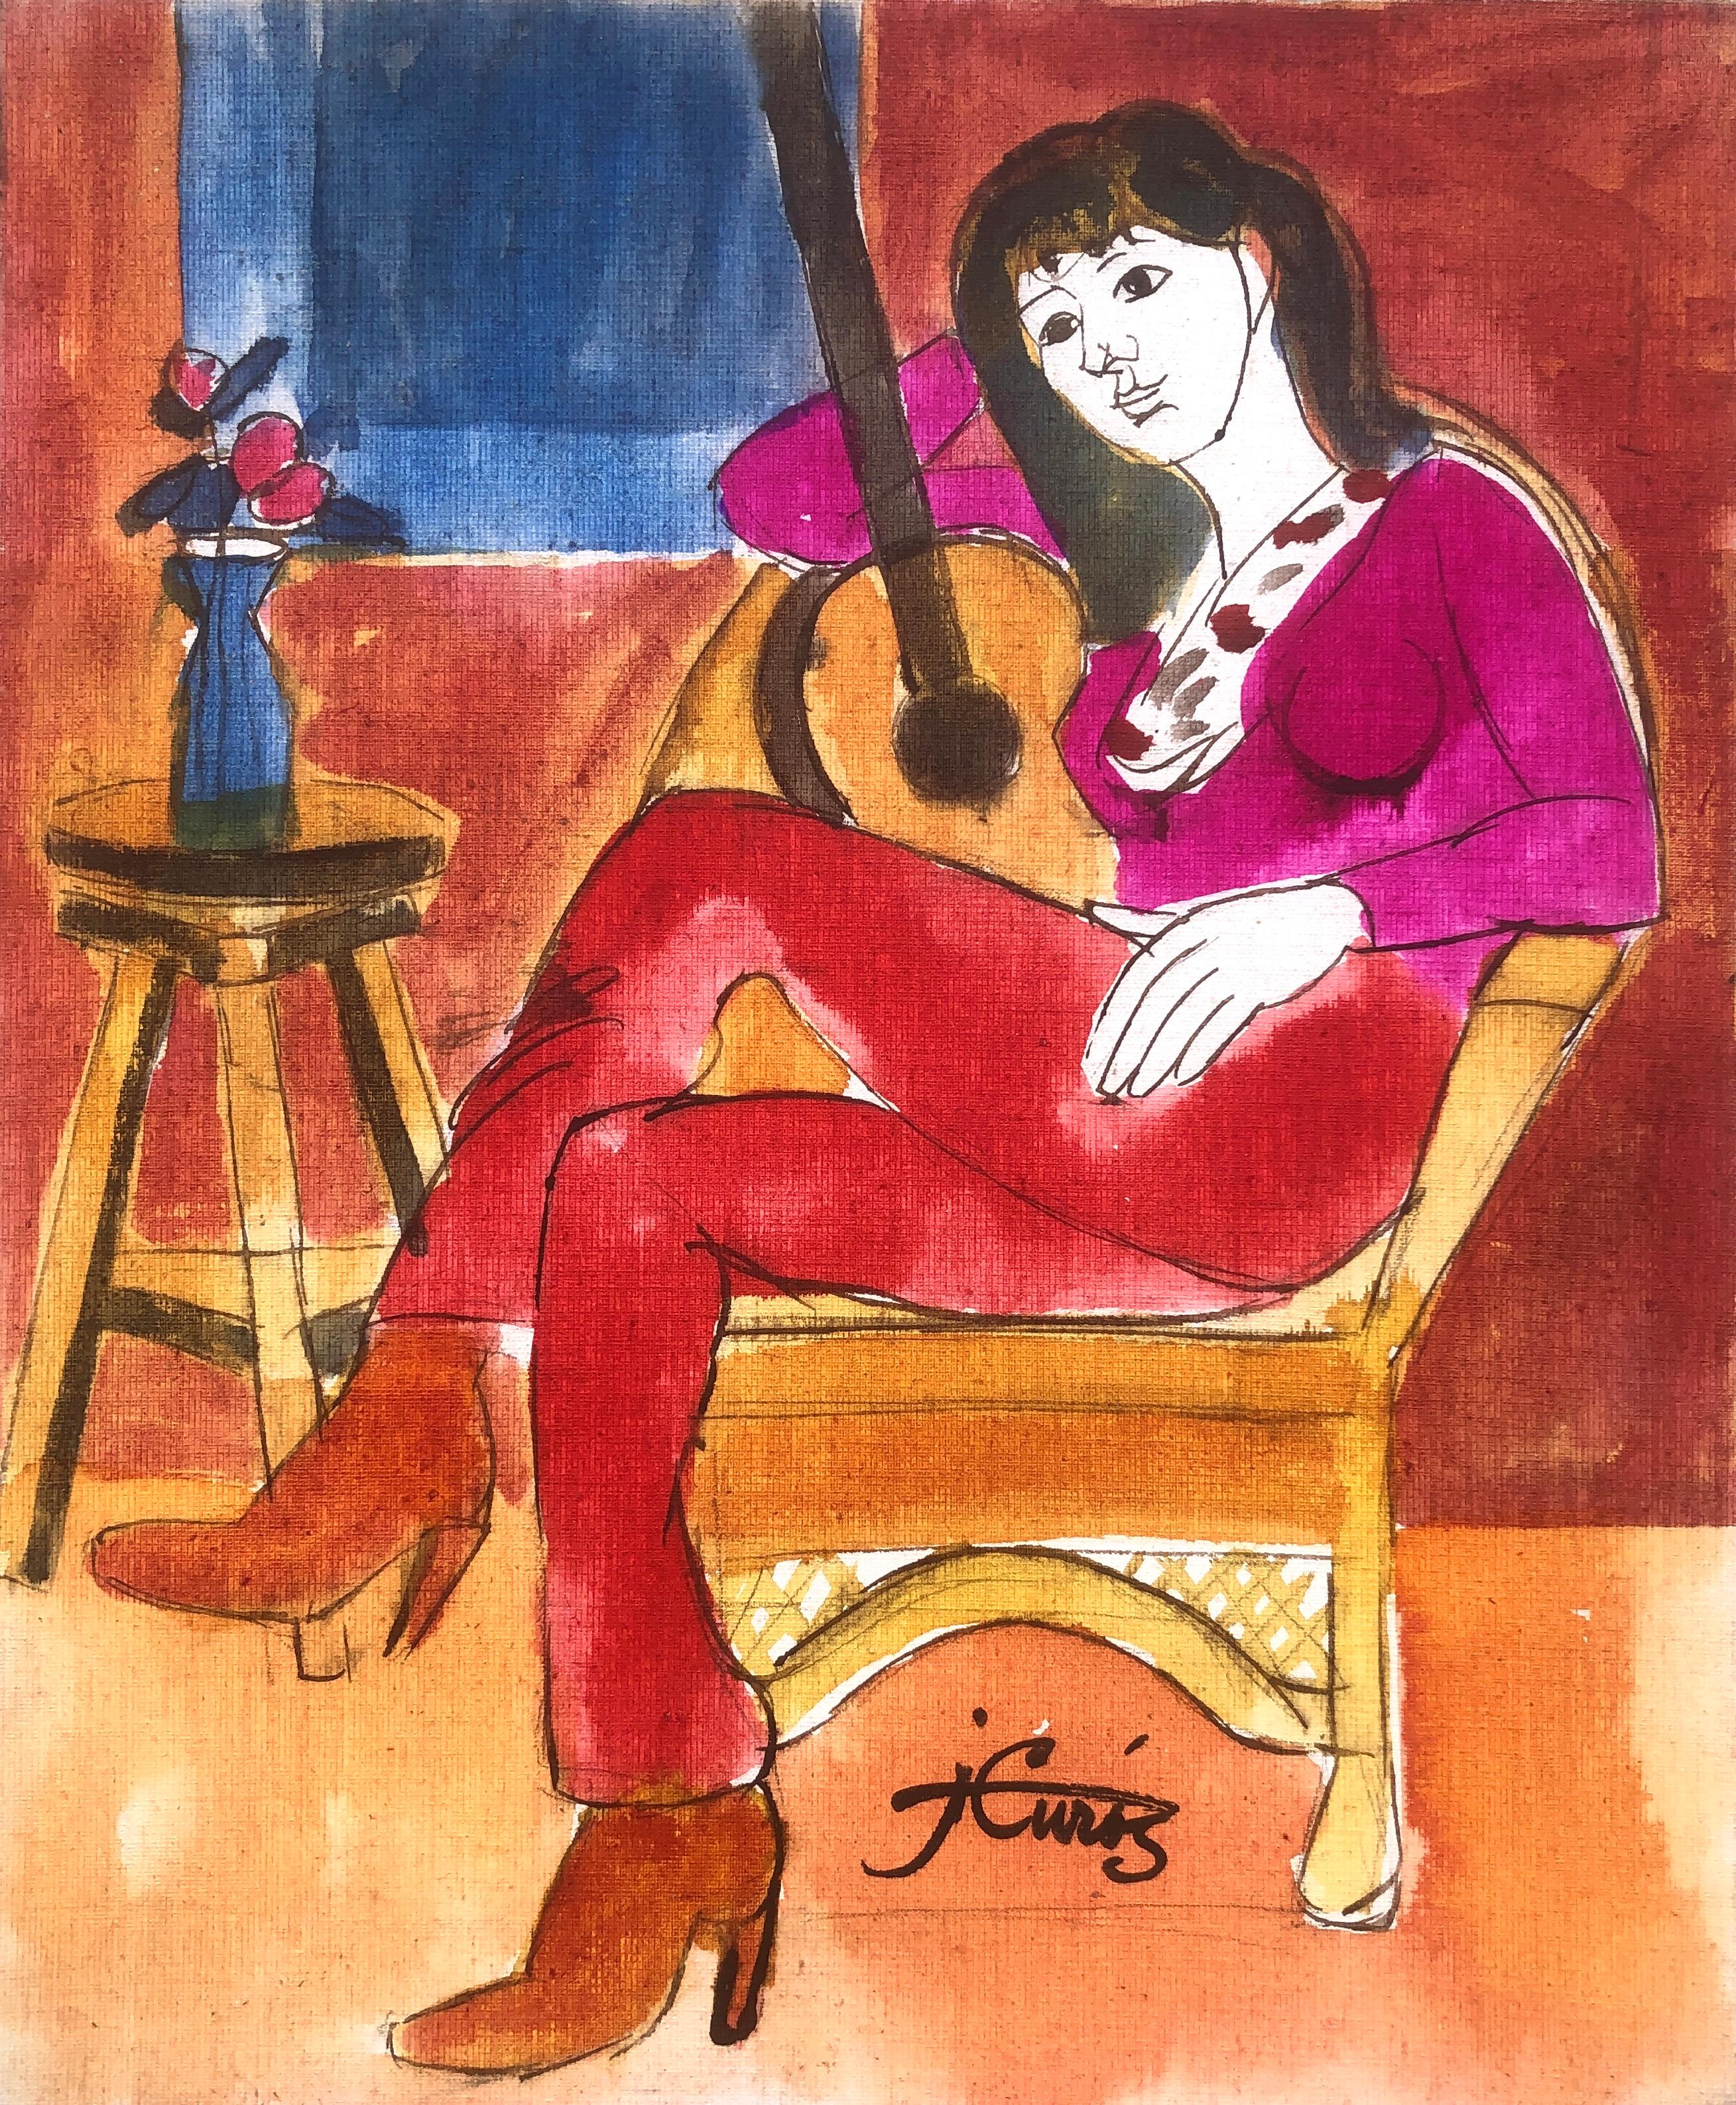 Jordi Curos Portrait Painting – Frau, die mit Gitarre posiert, Gemälde in Mischtechnik